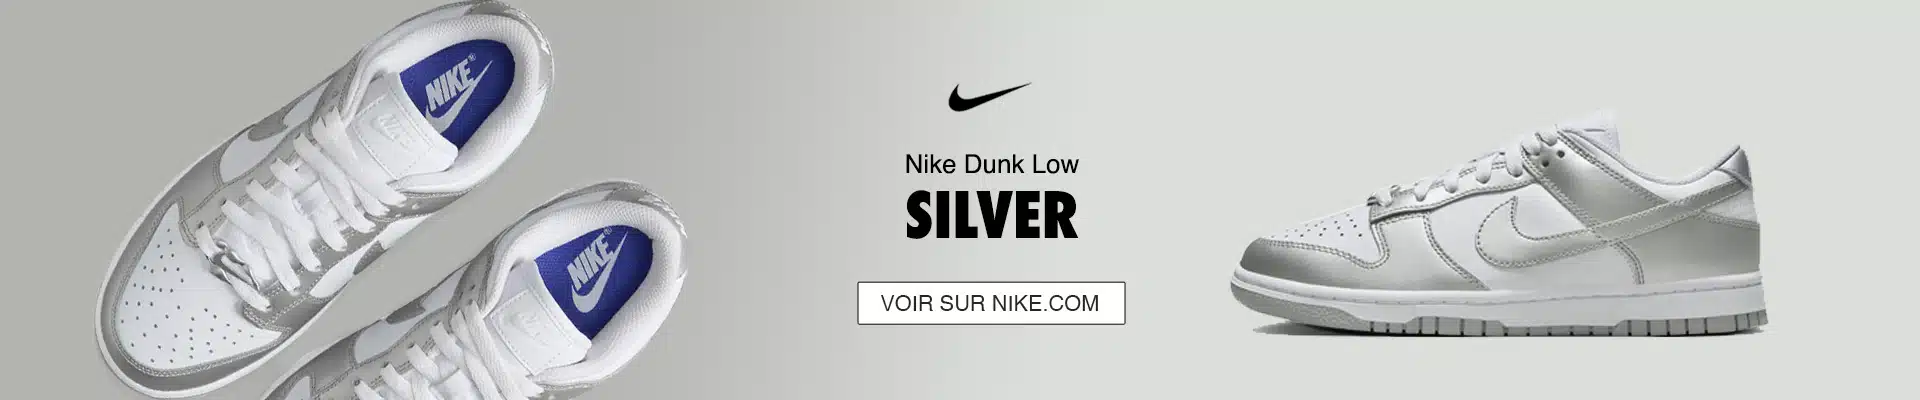 Nike Dunk Low Metallic Silver